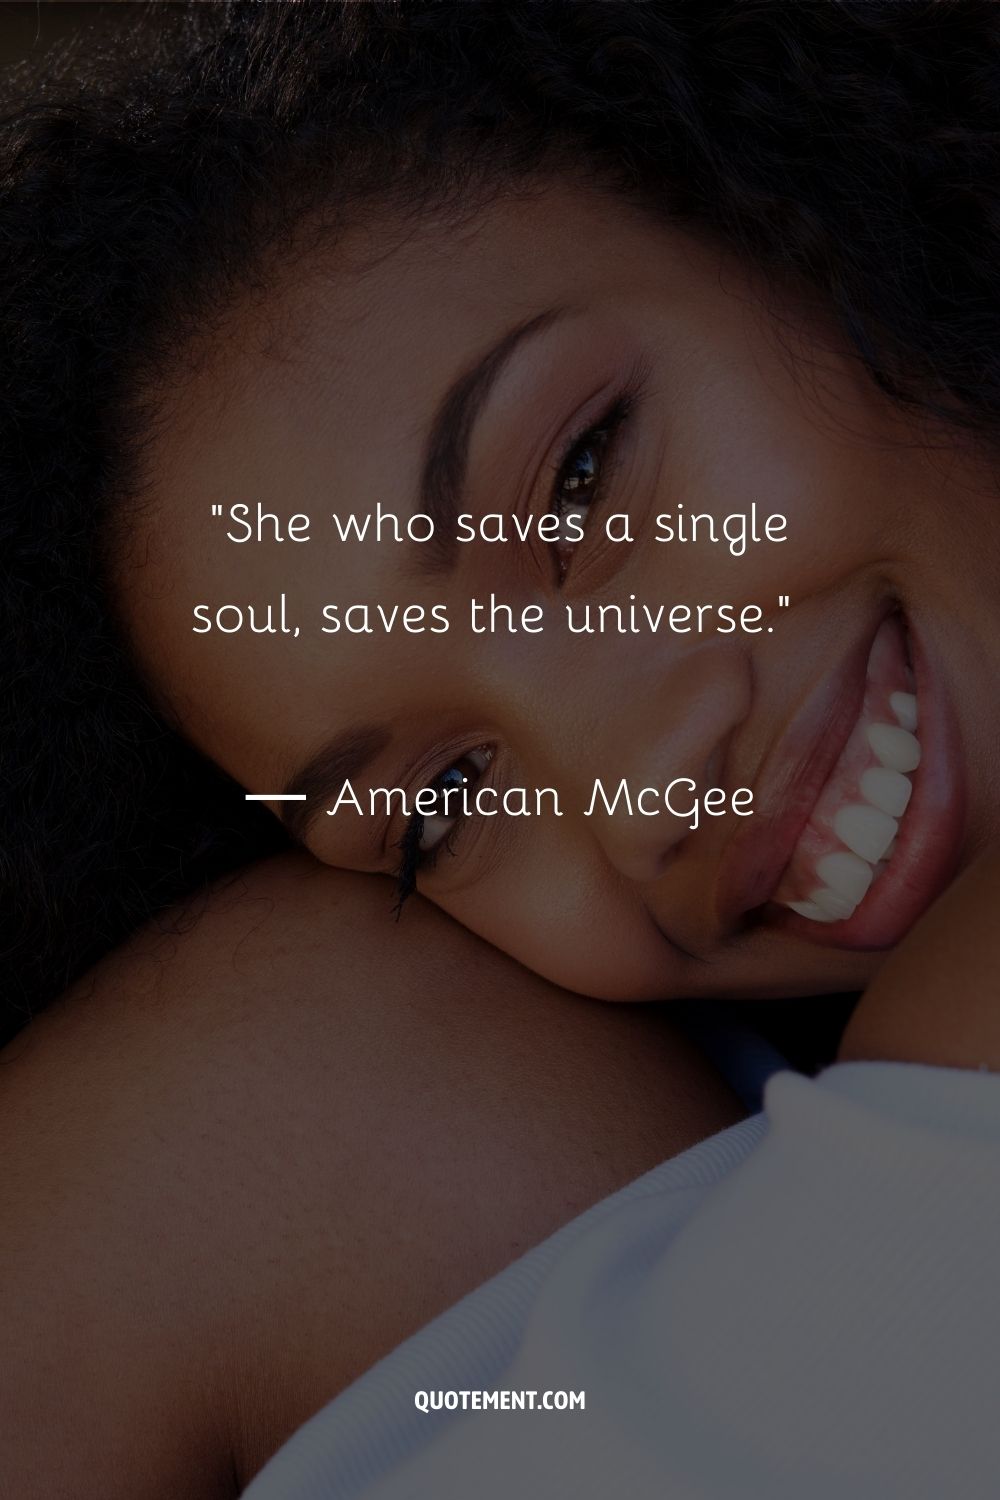 She who saves a single soul, saves the universe